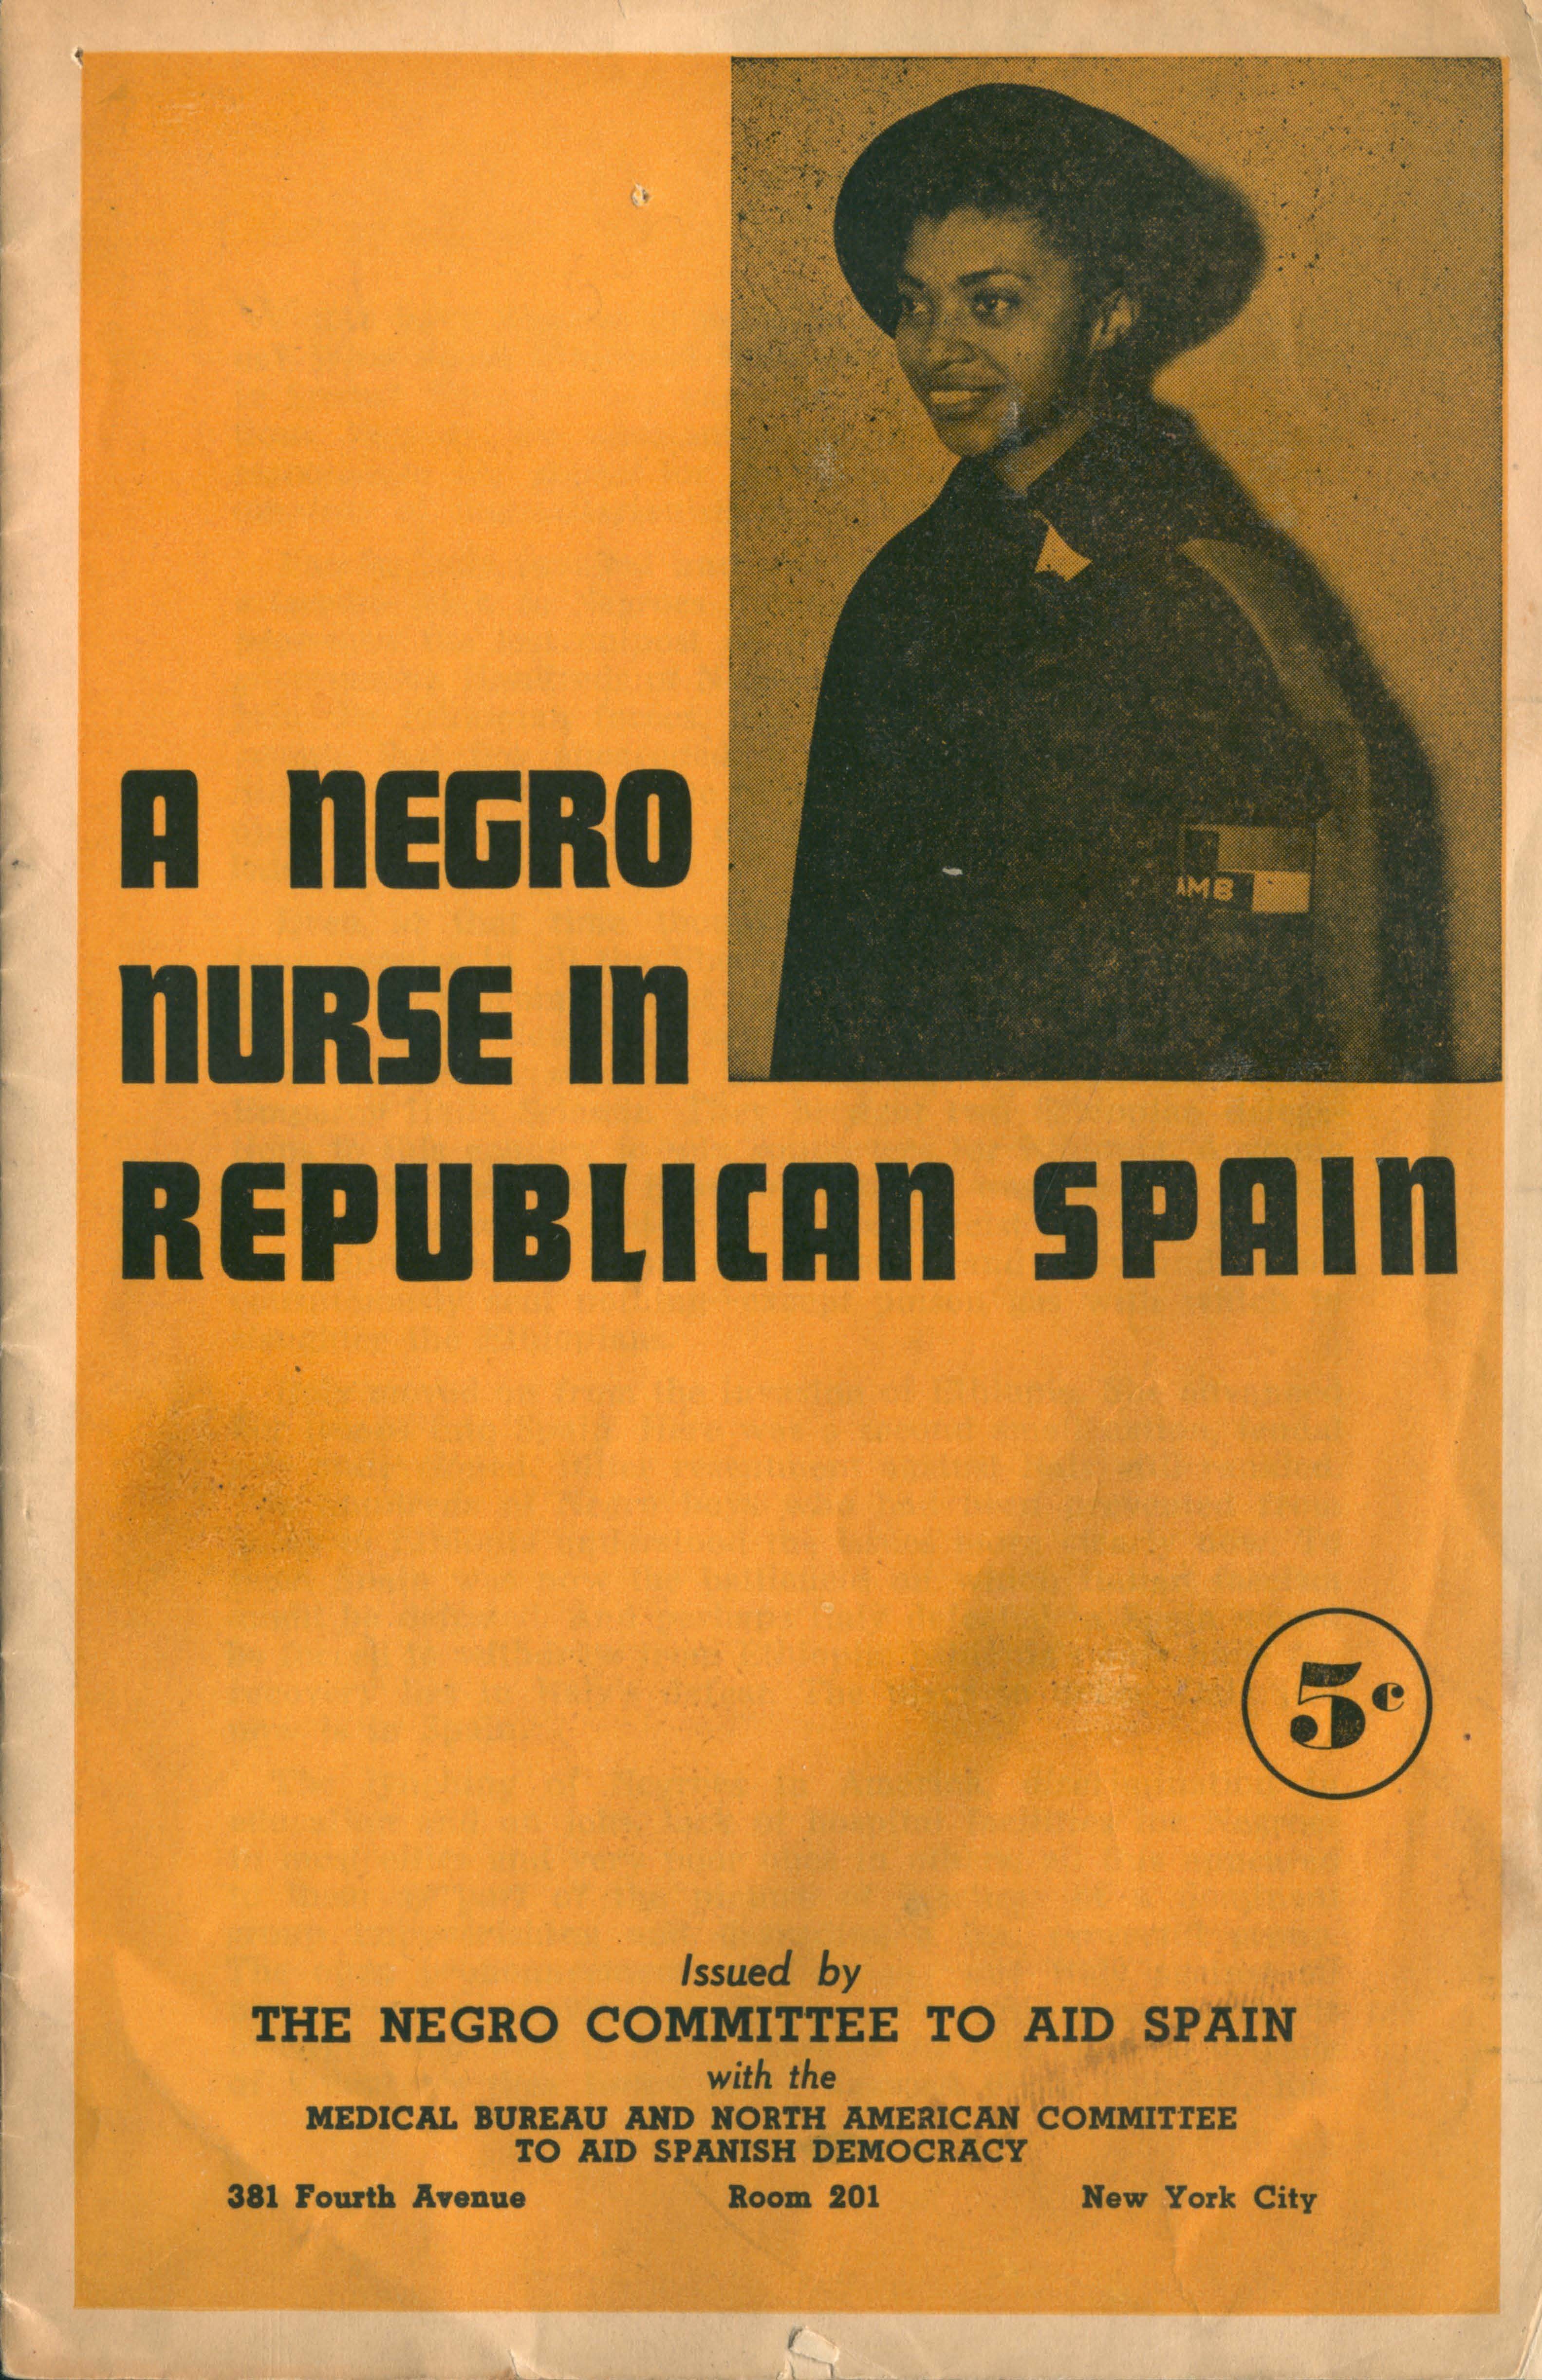 An African American Nurse in Republican Spain